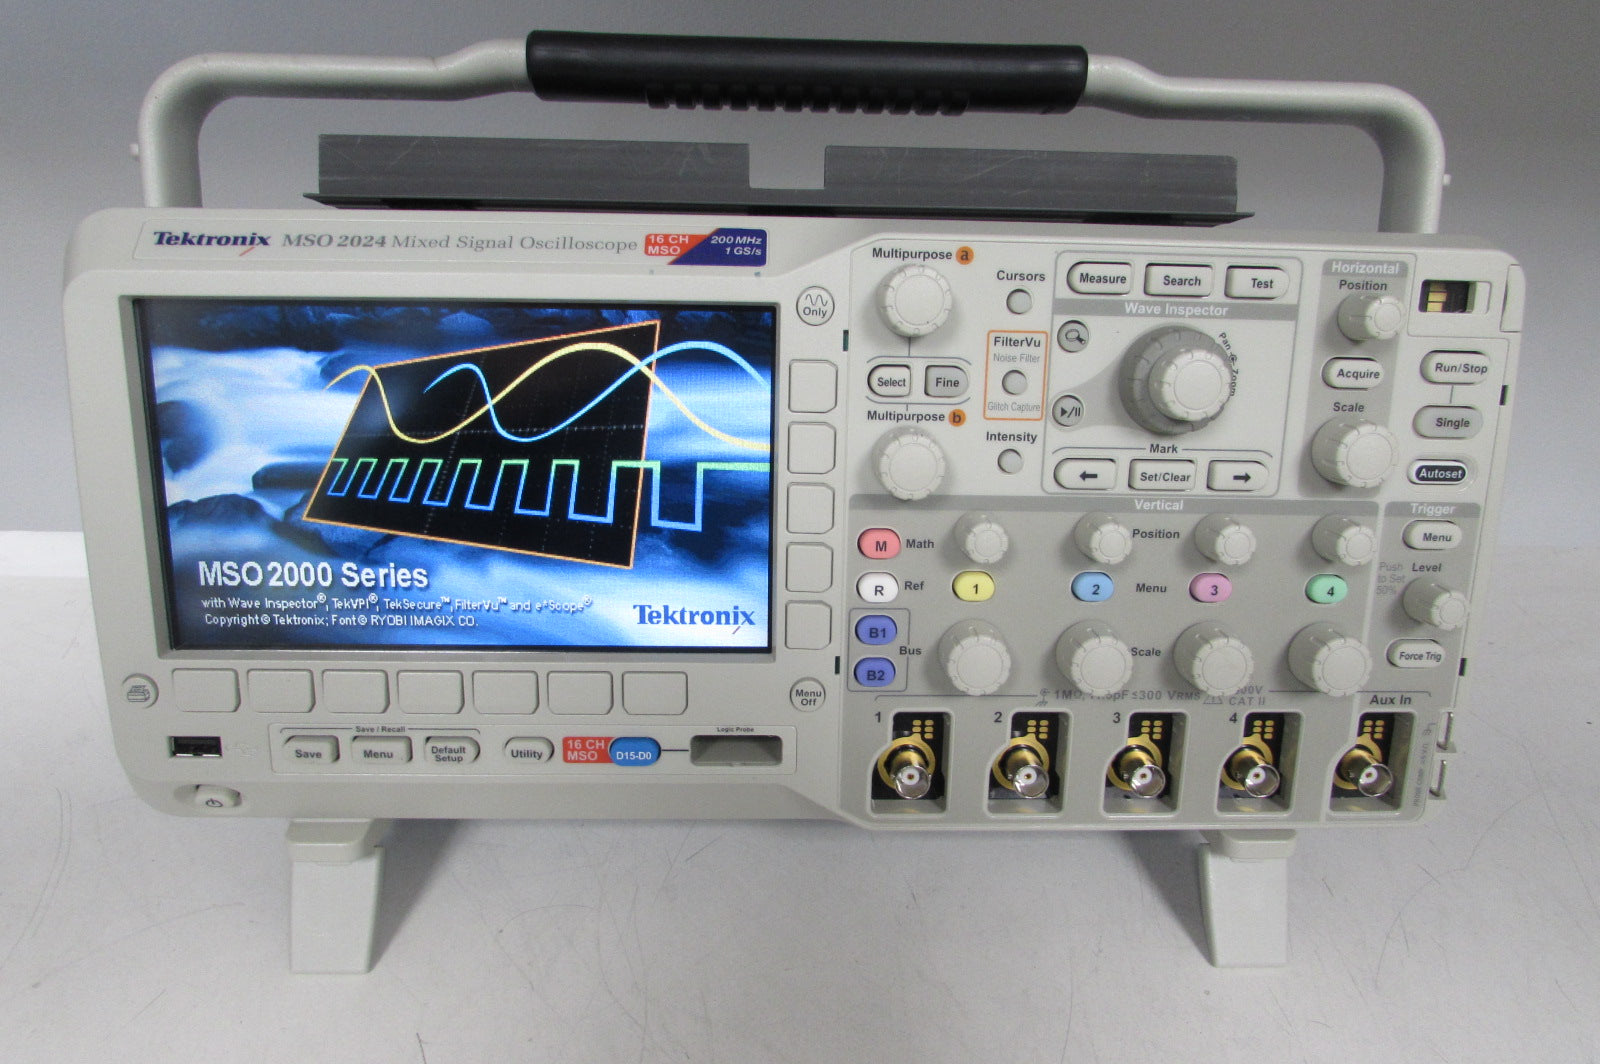 Tektronix MSO2024 Mixed Signal Oscilloscope, 200 MHz Scope,1GS/, 4 